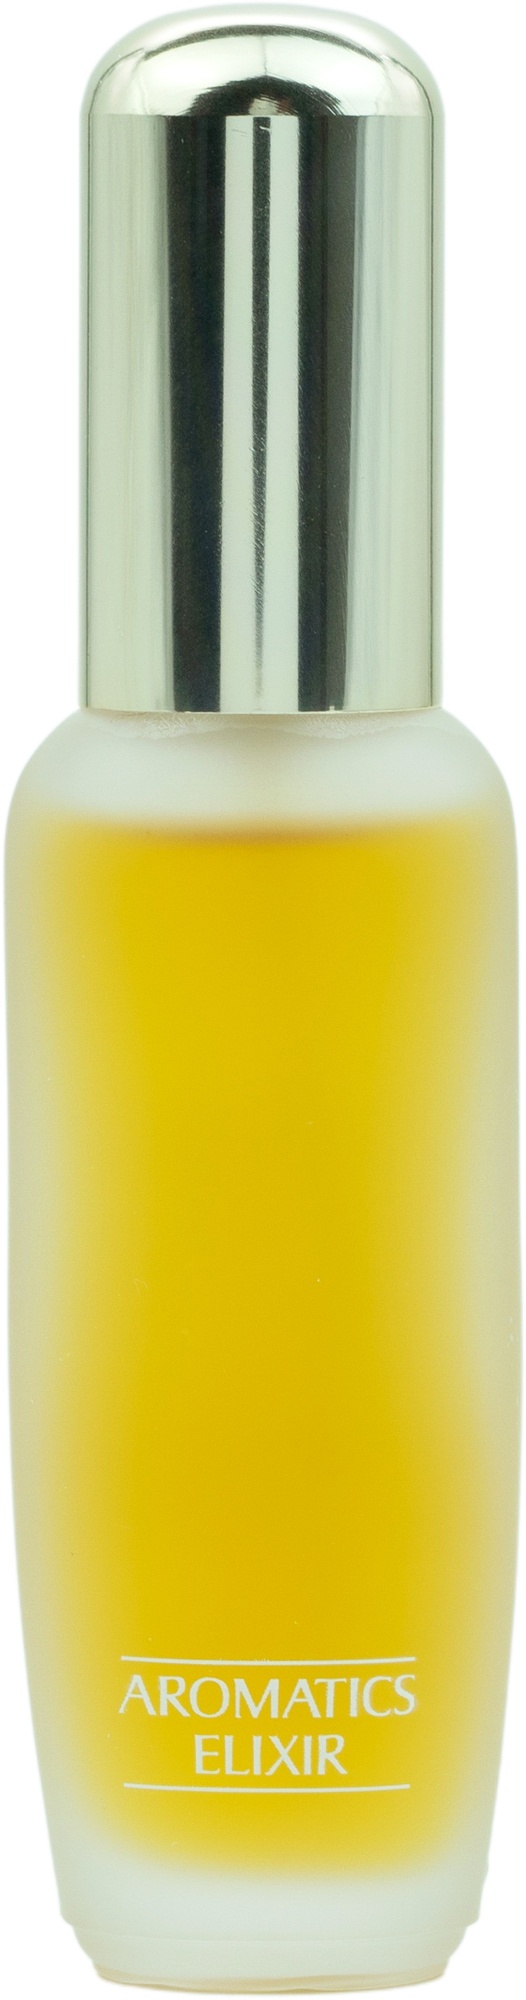 Bild Aromatics Elixir Eau de Parfum 25 ml